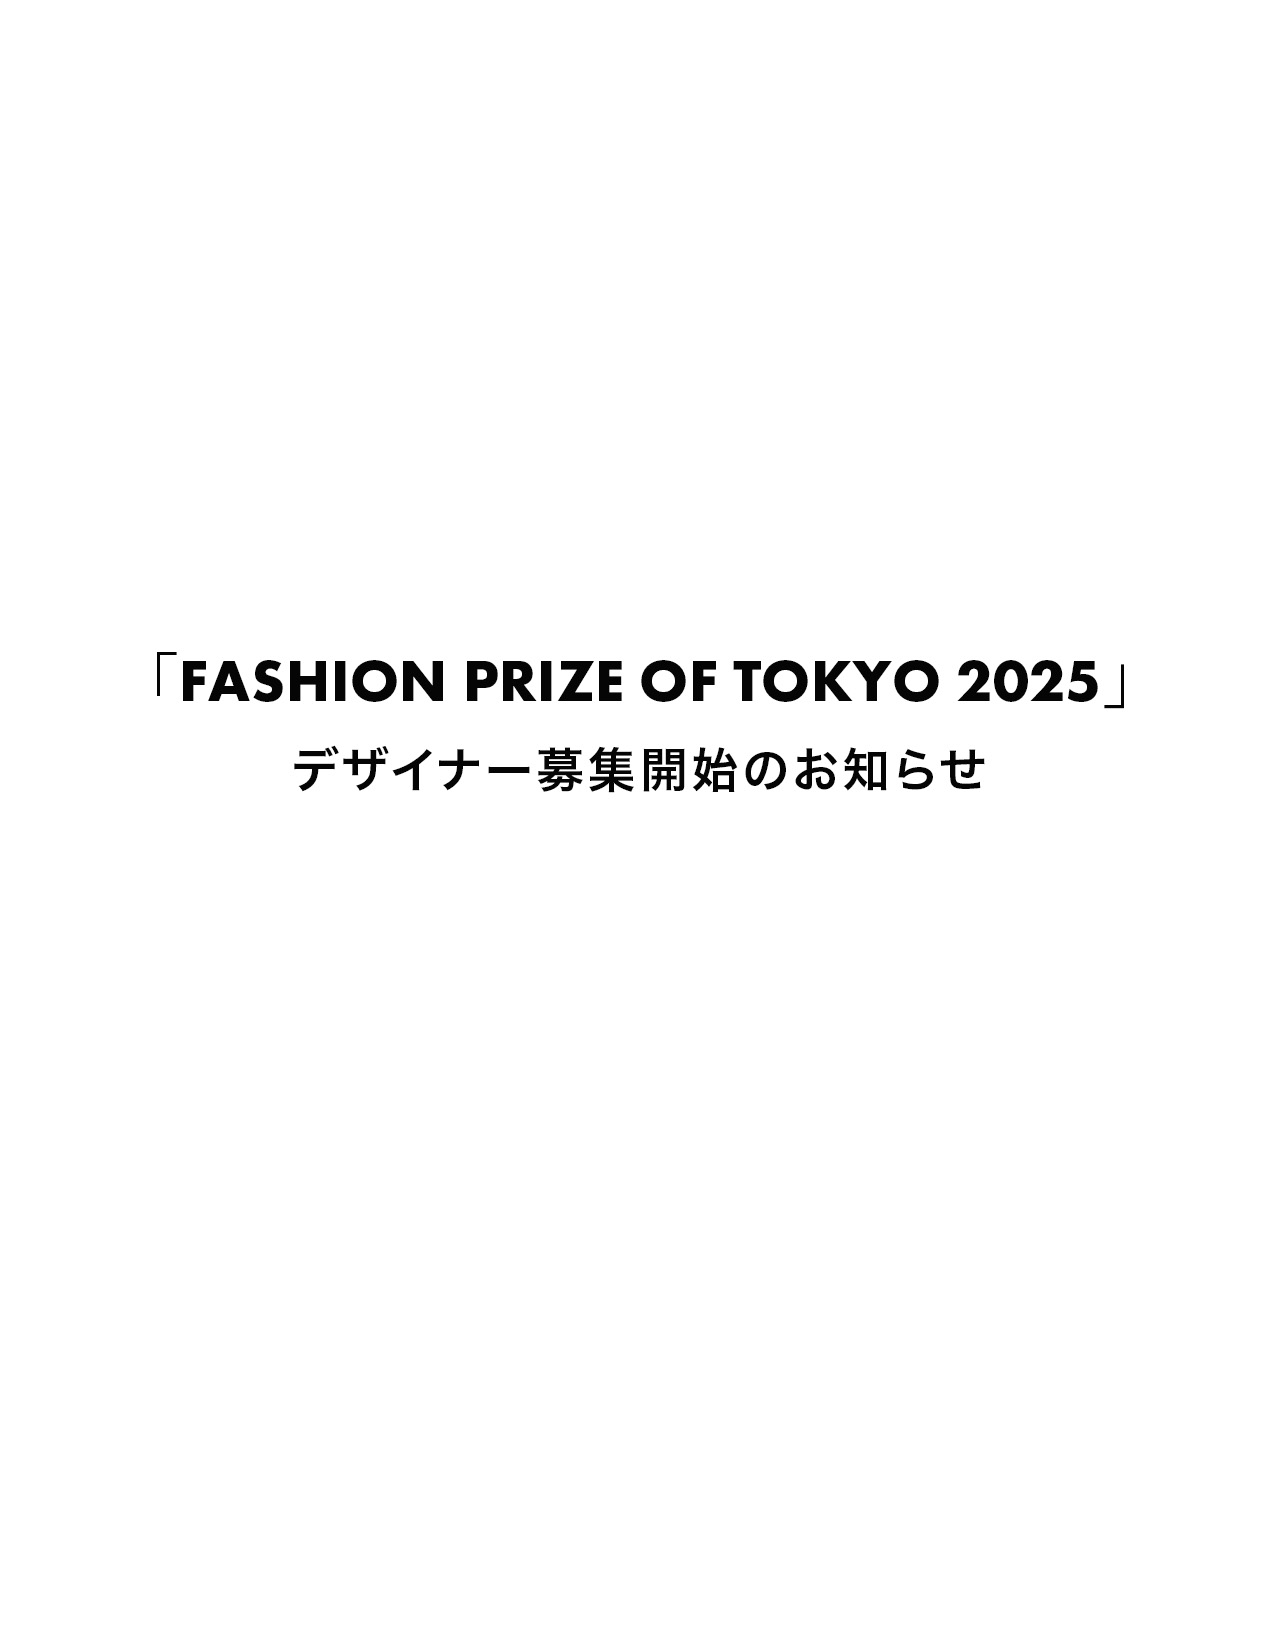 FASHION PRIZE OF TOKYO 2025 デザイナー募集開始のお知らせ